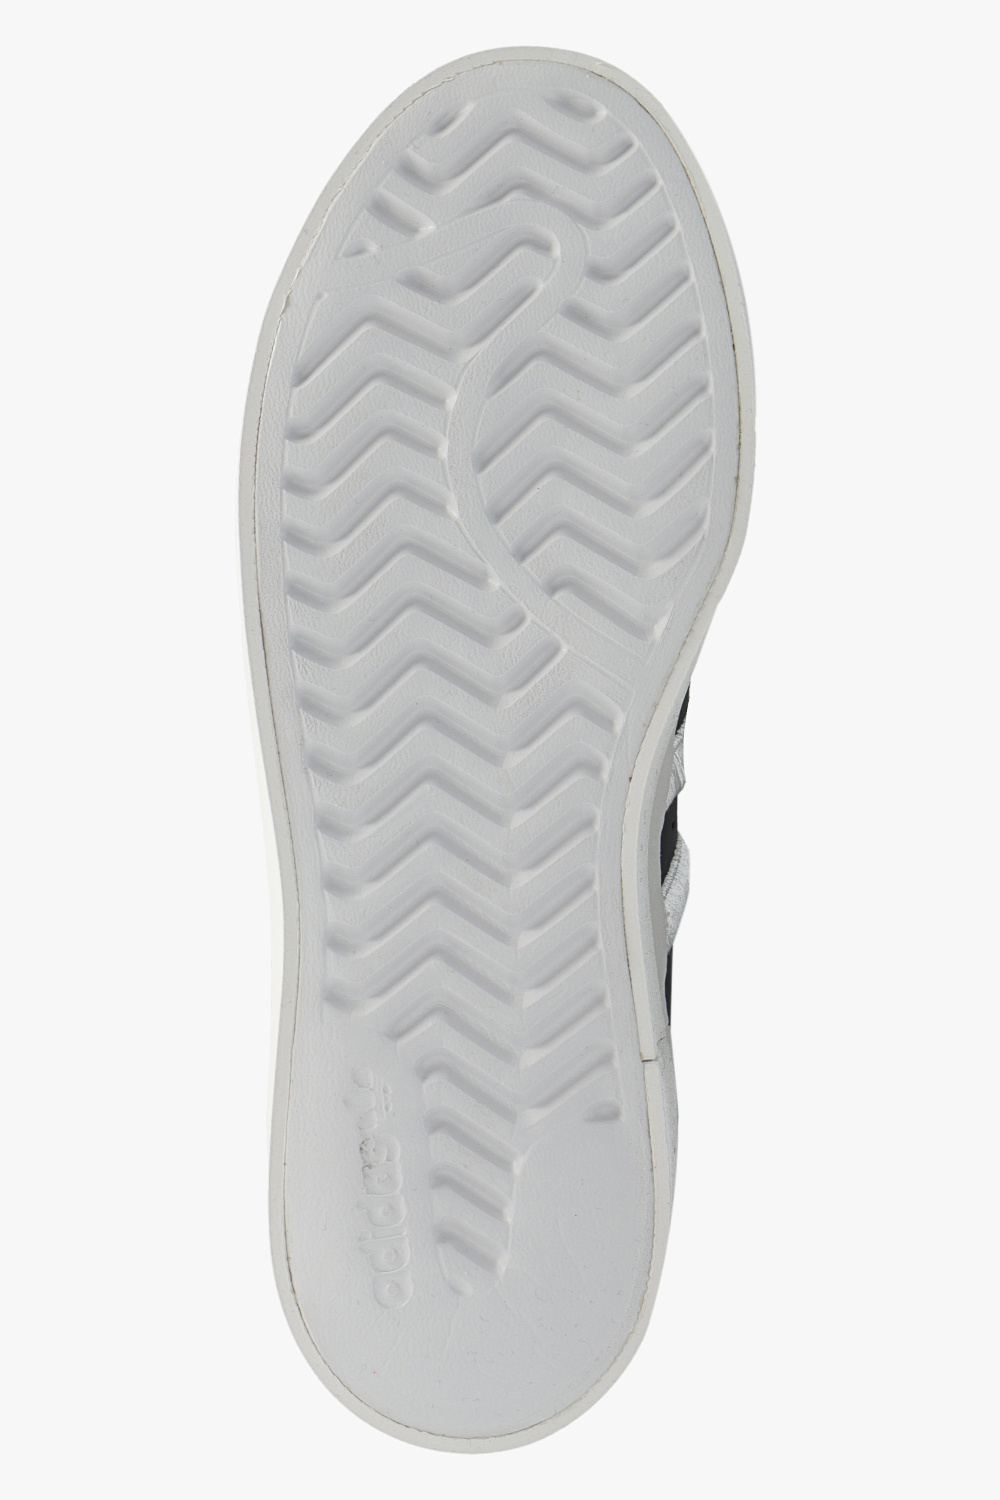 adidas Originals Superstar Bonega platform sneakers in white and